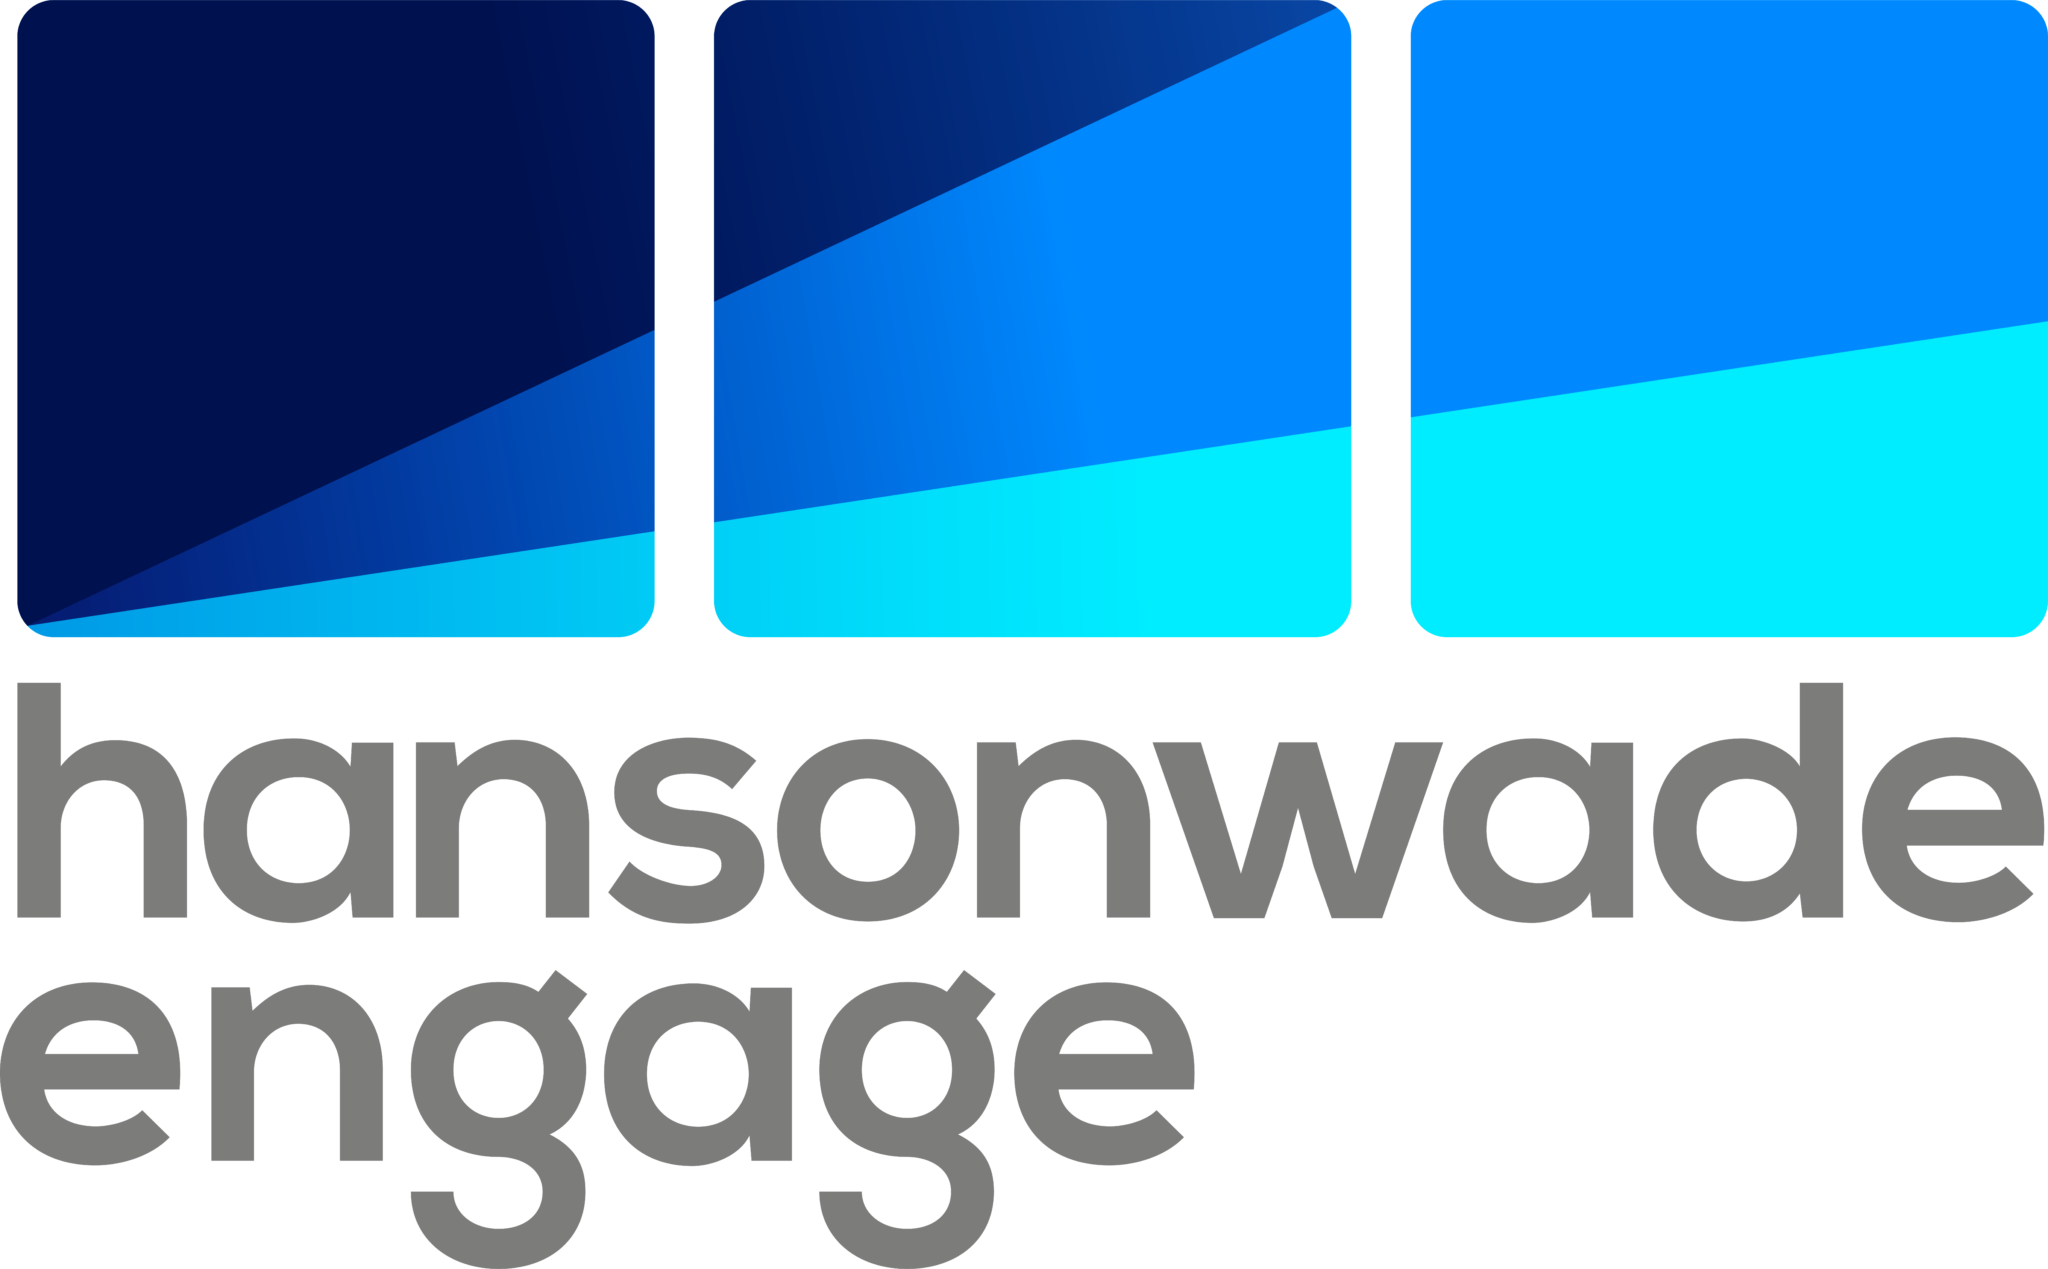 hw_engage-logo-col-002-2048x1269 (1)